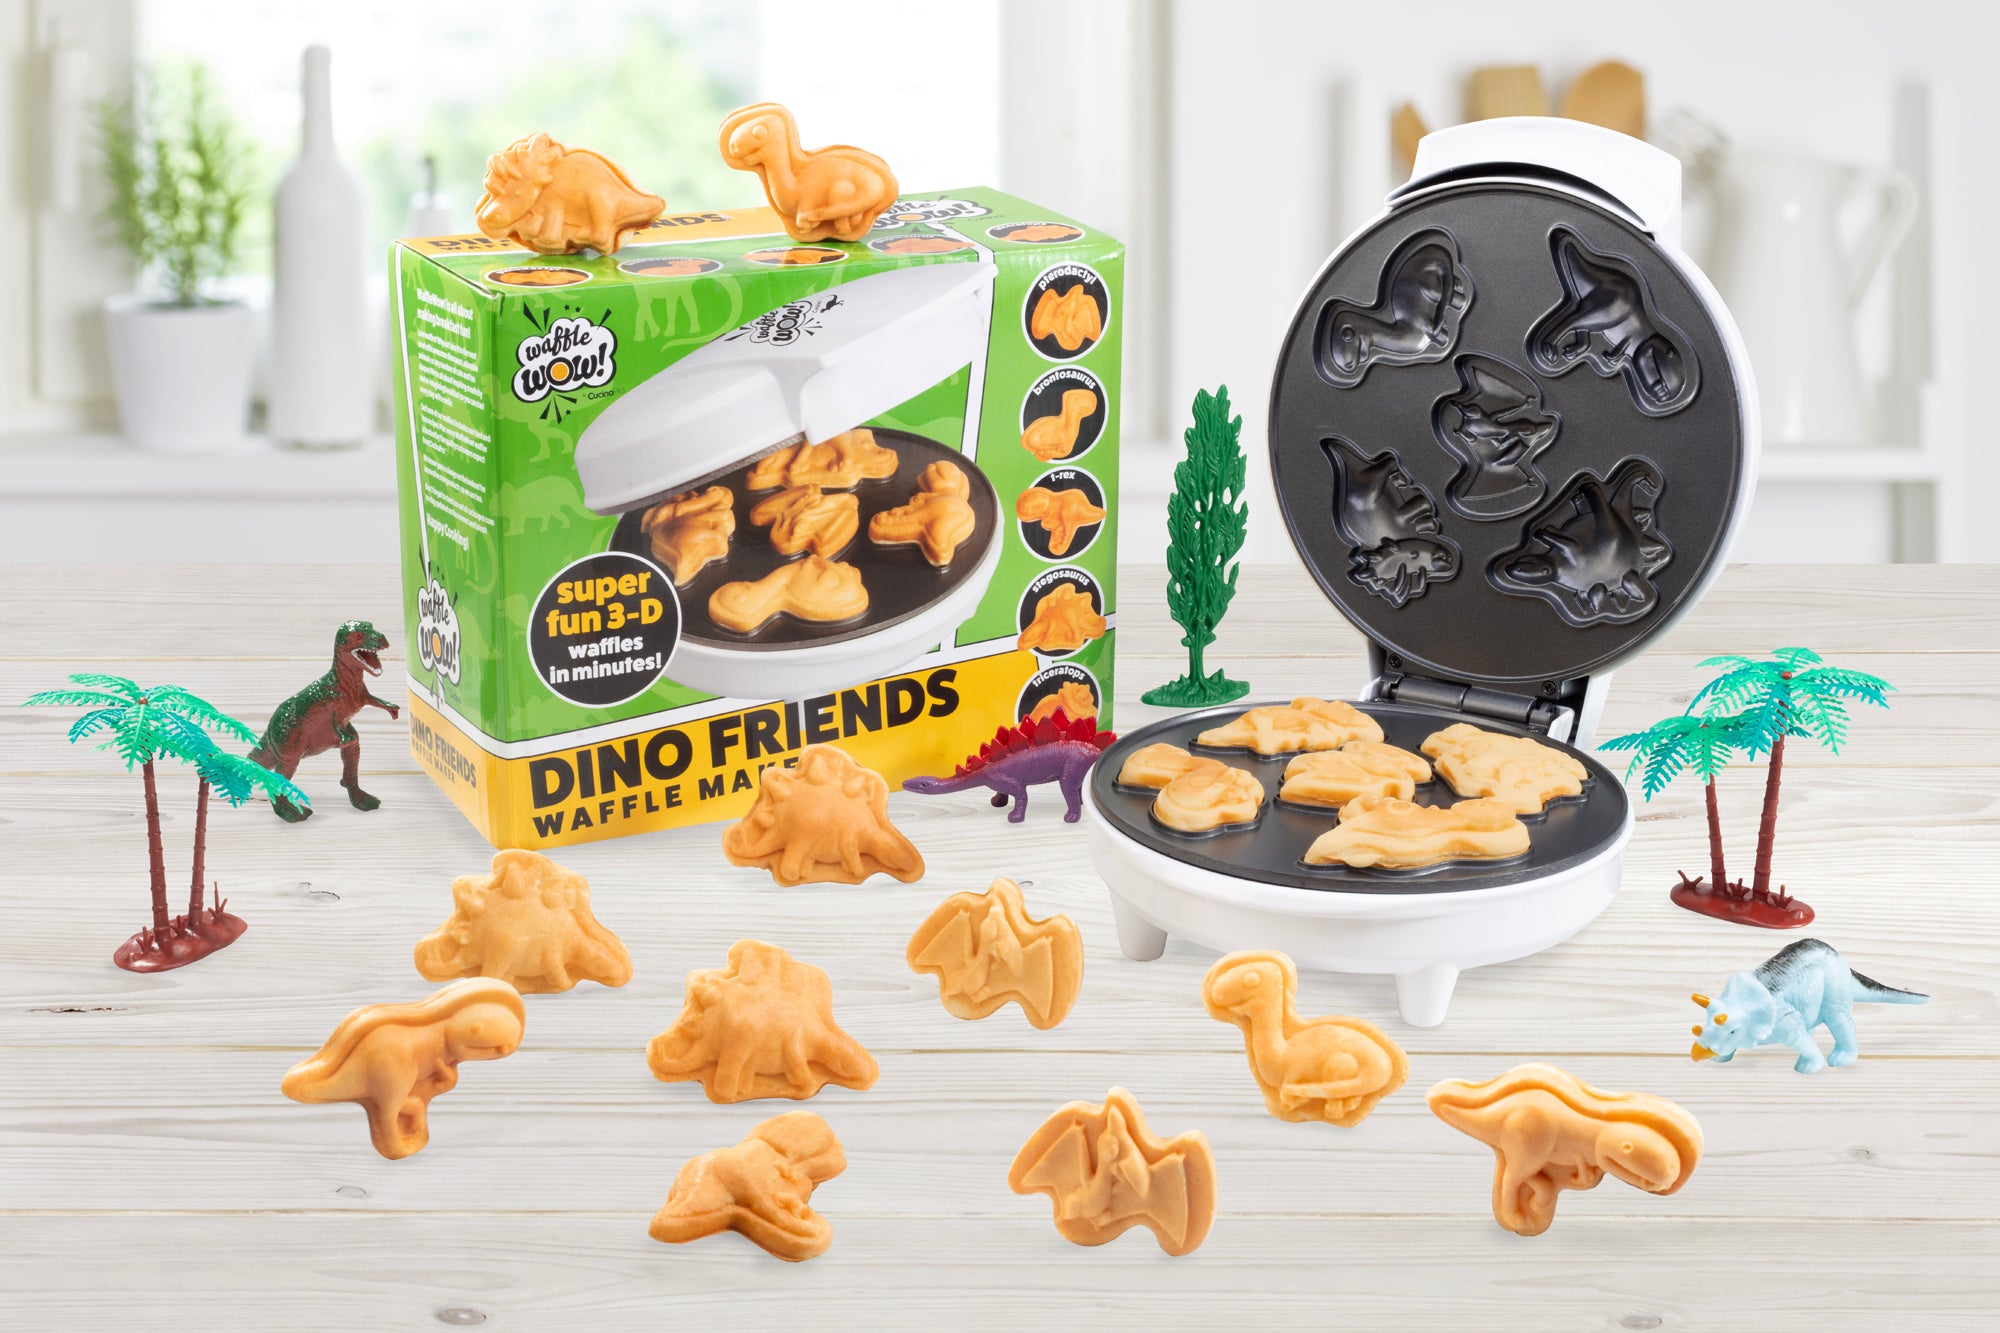 Dino Friends Waffle Maker